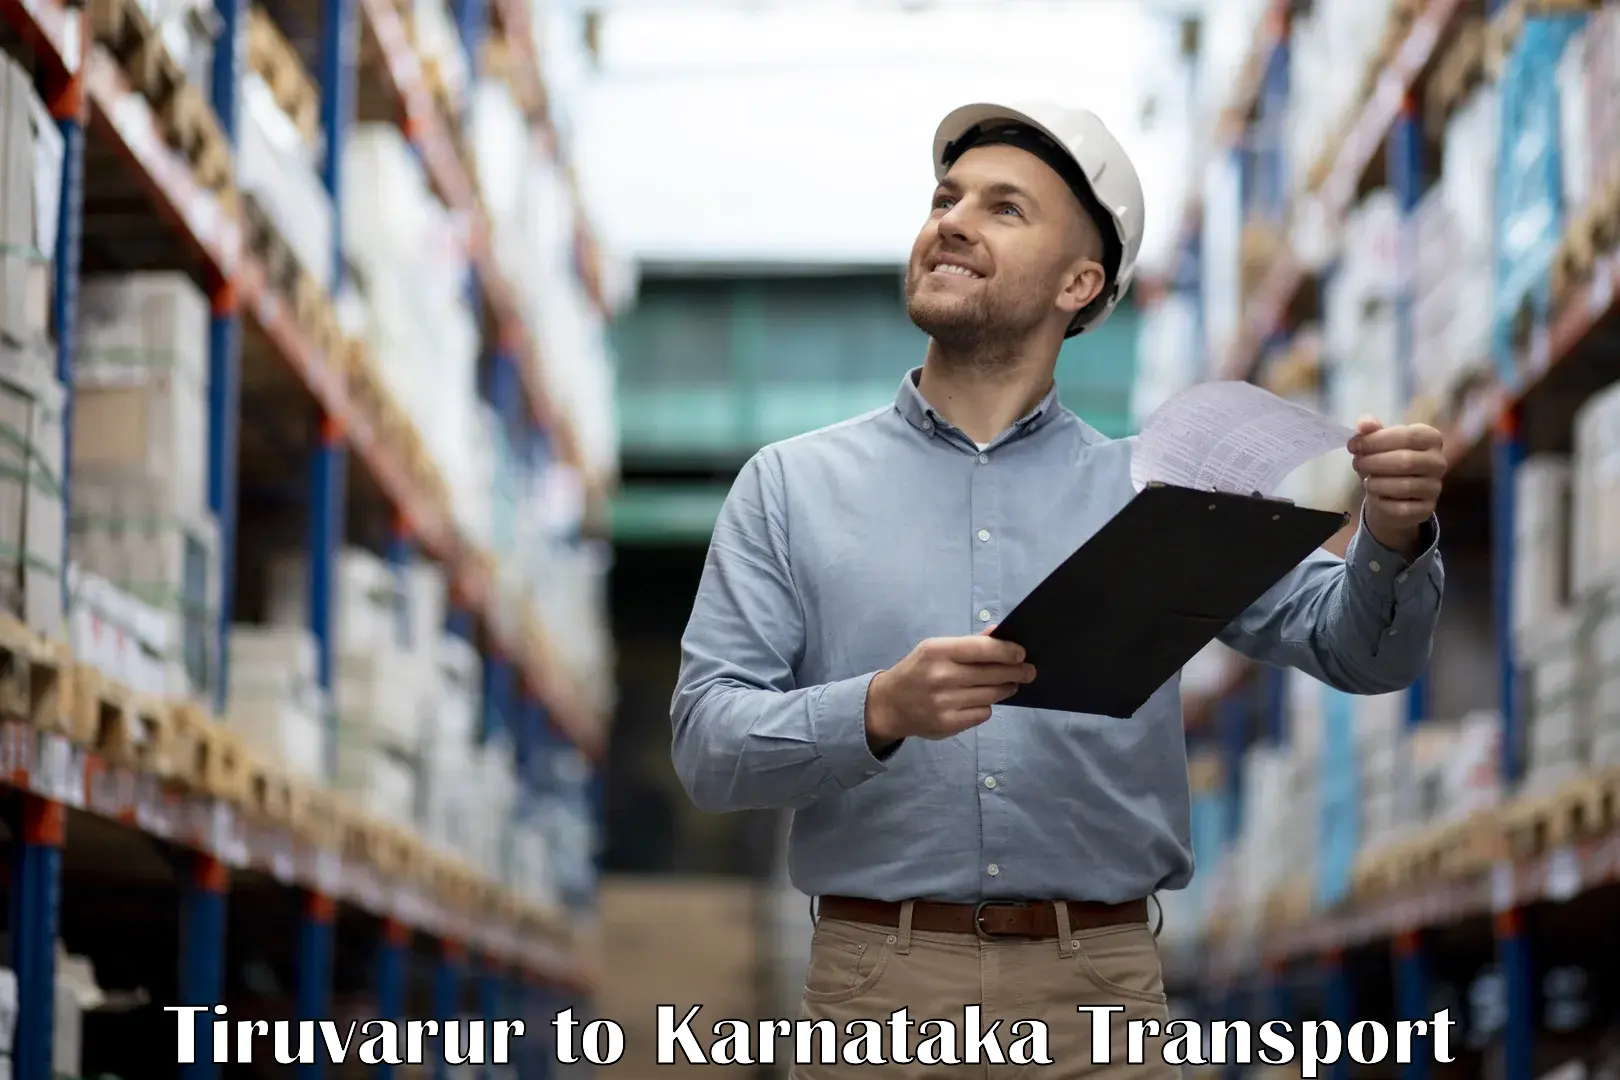 Goods delivery service Tiruvarur to Karkala